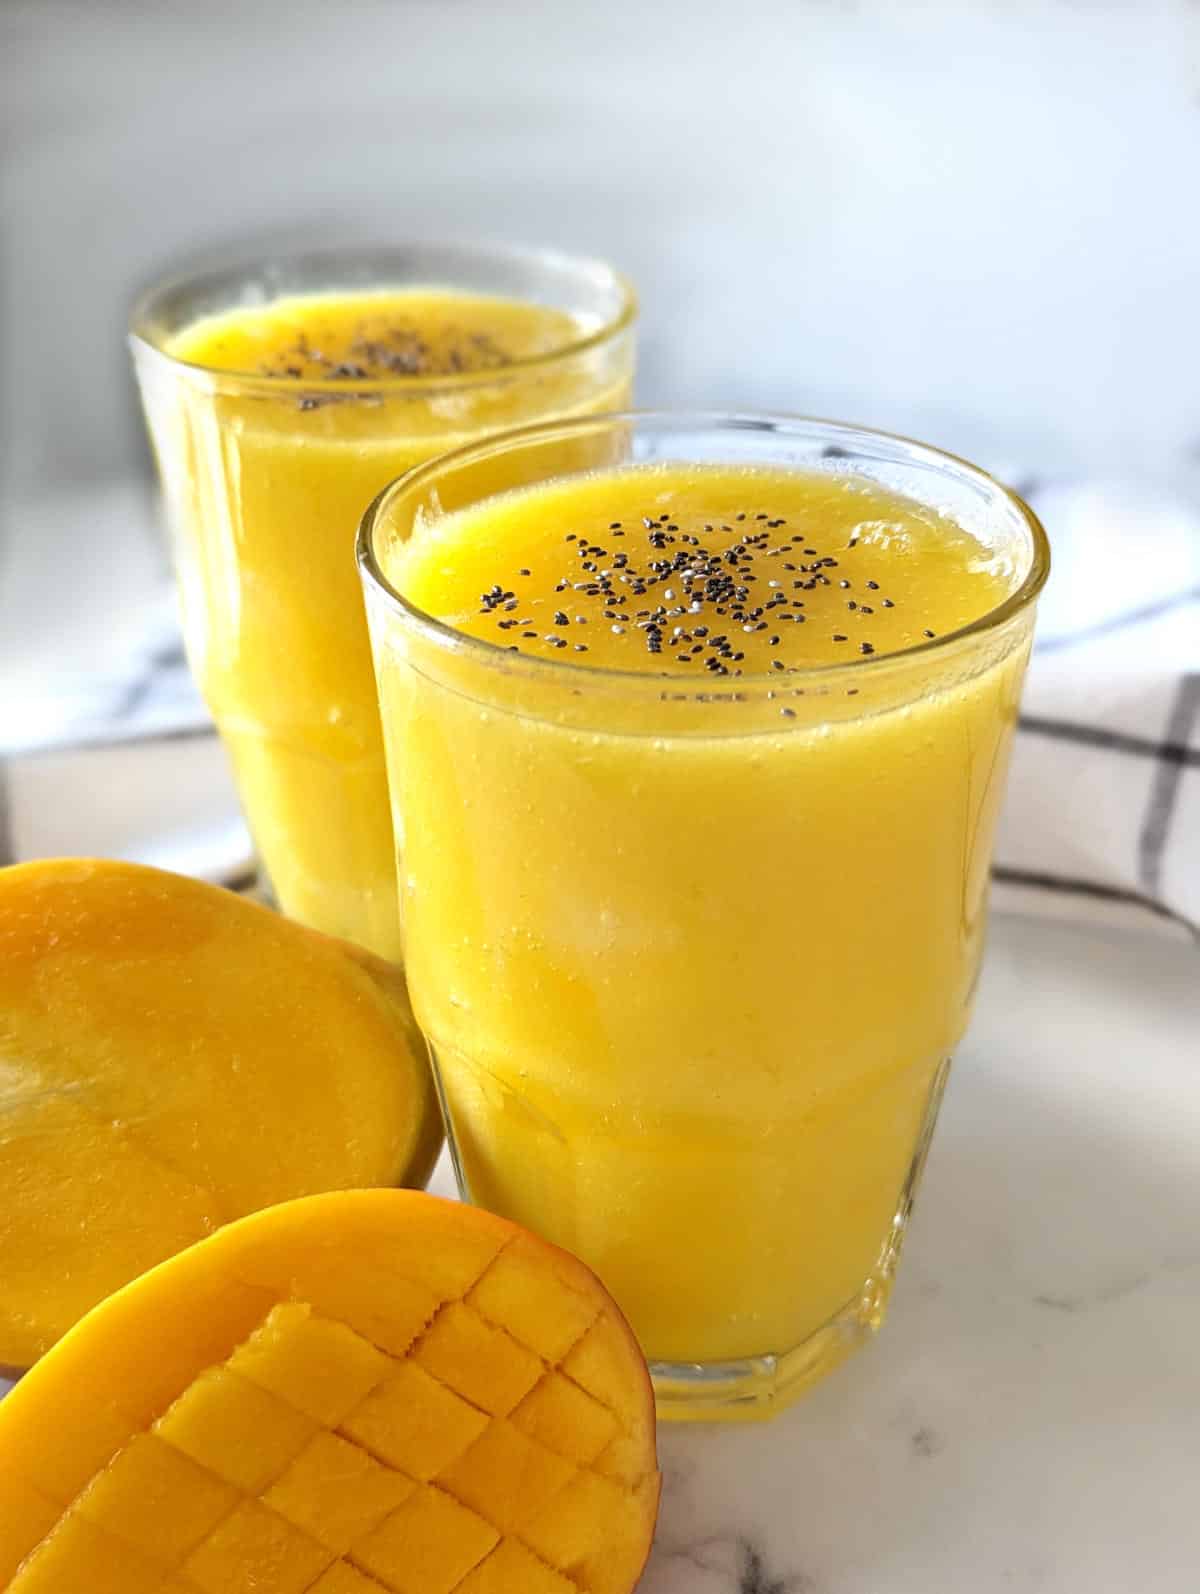 Two glasses of mango juice.